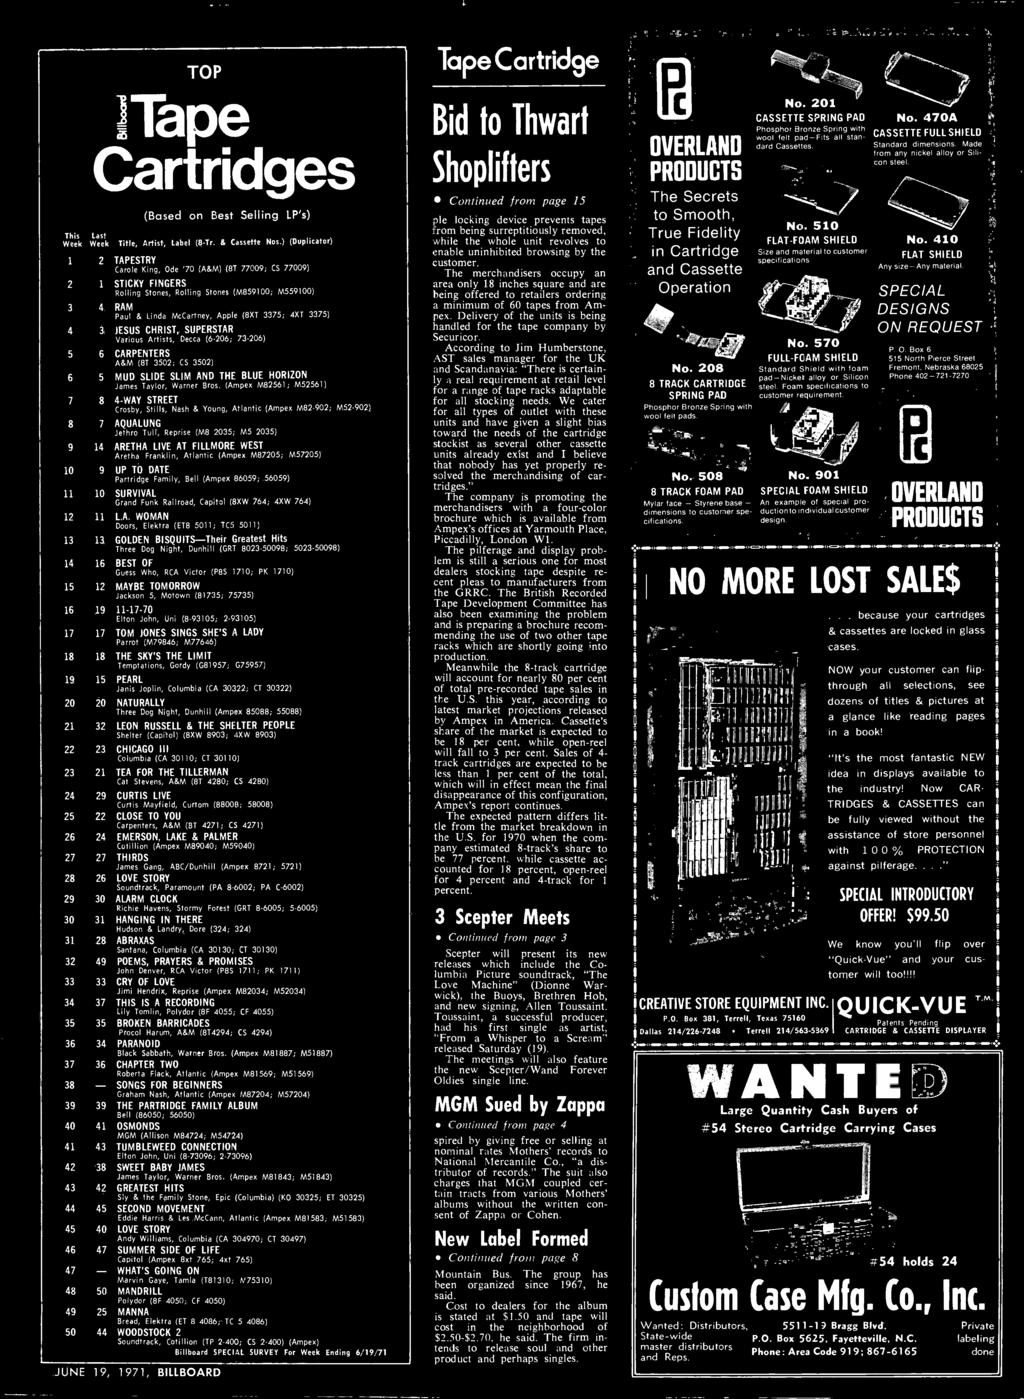 3375) 4 3 JESUS CHRIST, SUPERSTAR Various Artists, Decca (6-206; 73-206) 5 6 CARPENTERS A&M (8T 3502; CS 3502) 6 5 MUD SLIDE SLIM AND THE BLUE HORIZON James Taylor, Warner Bros.